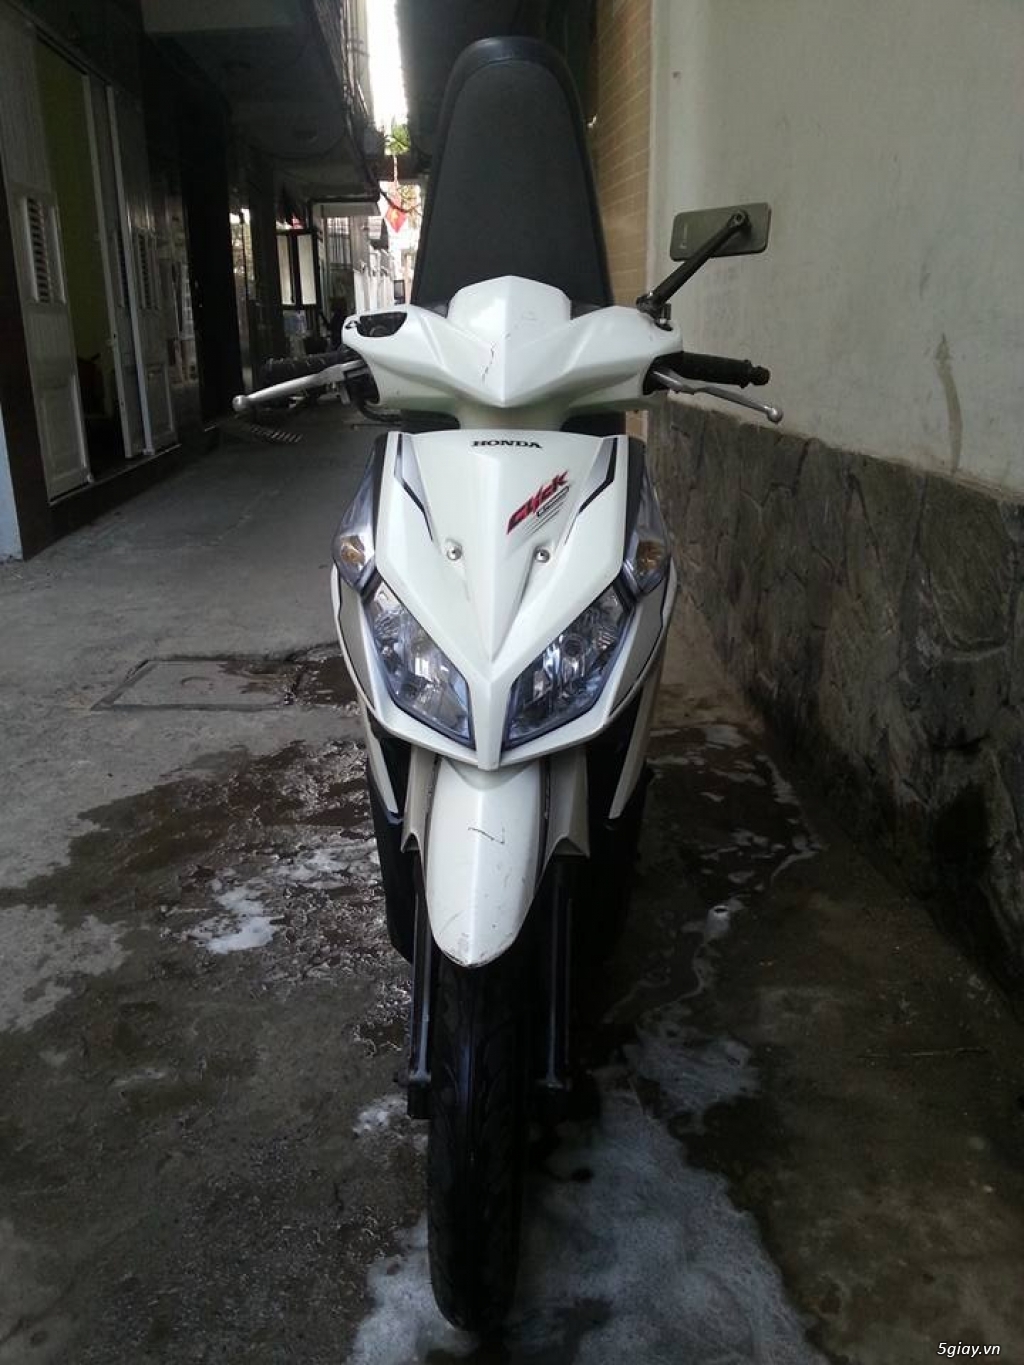 Honda click 110cc 15500 Baht only  Thailand motorcycles  Facebook